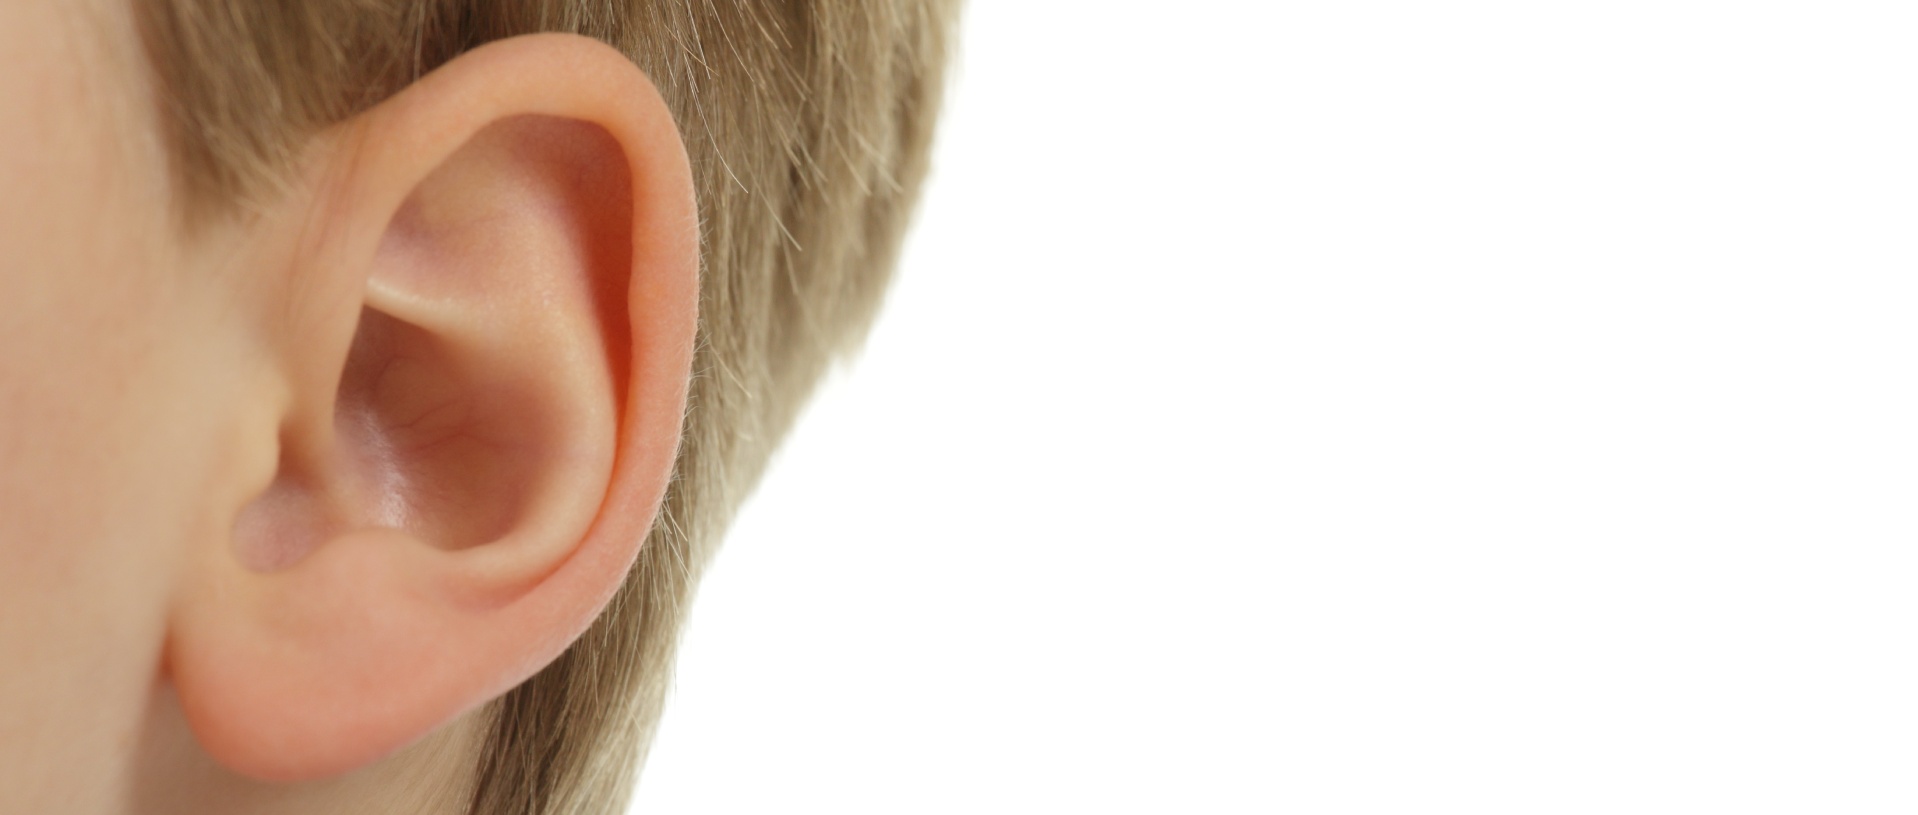 the ear, earlobe